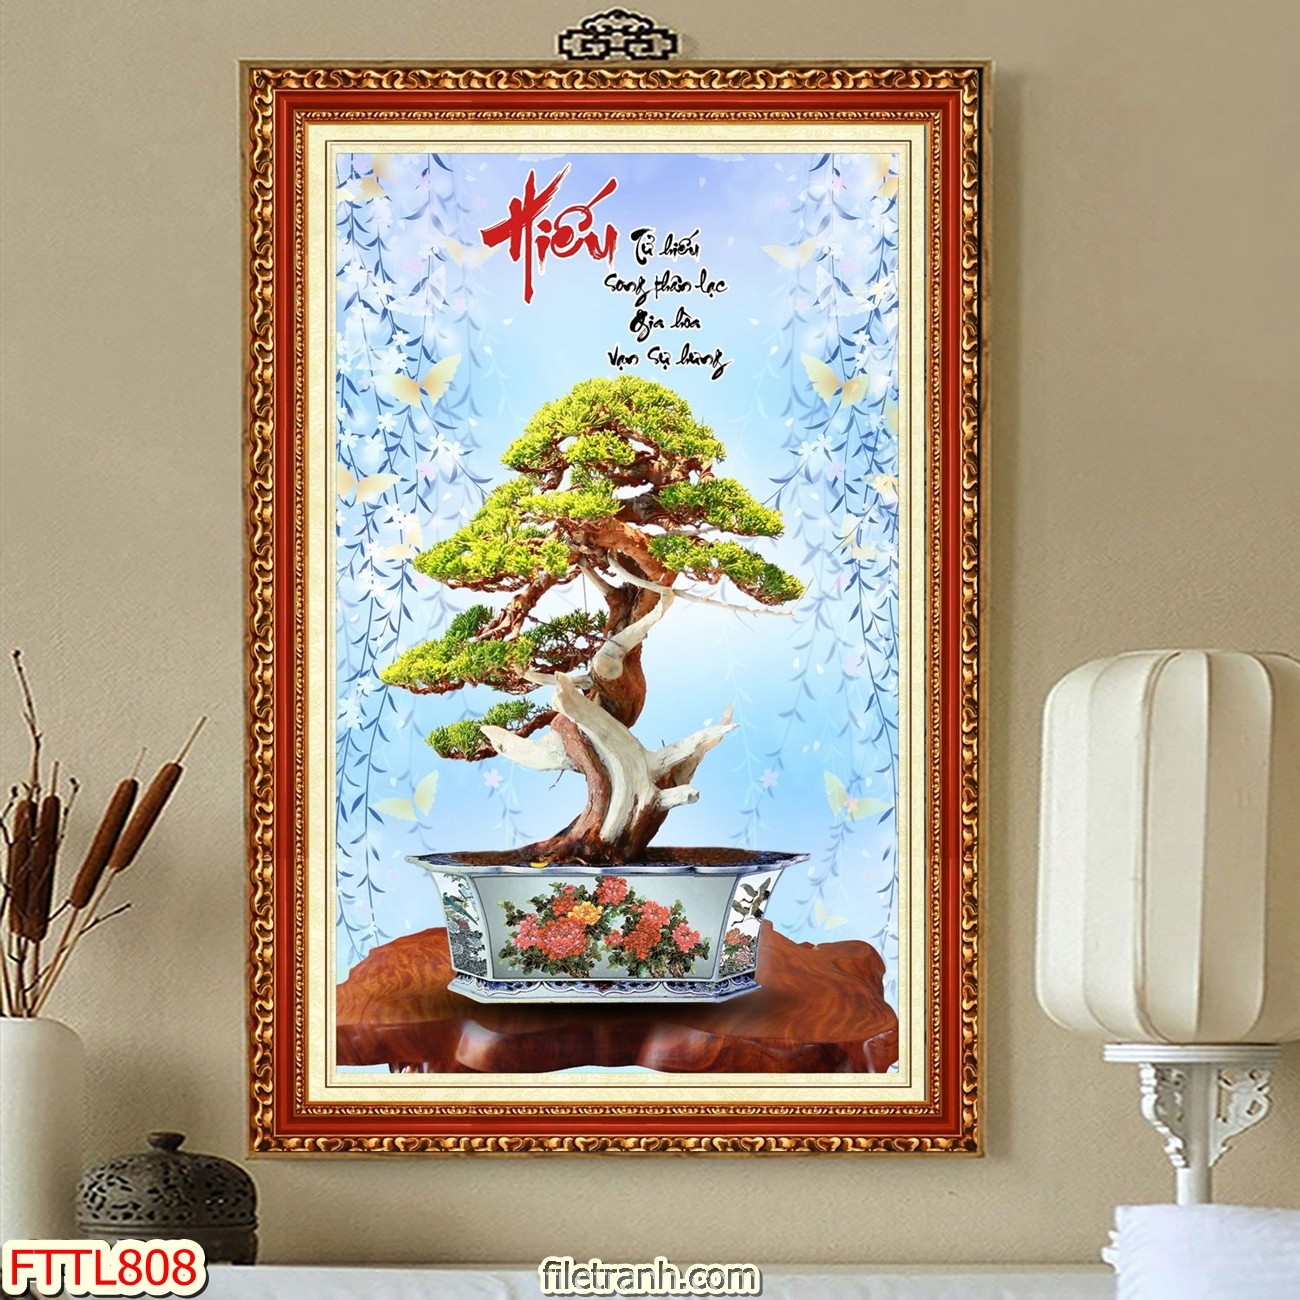 https://filetranh.com/file-tranh-chau-mai-bonsai/file-tranh-chau-mai-bonsai-fttl808.html